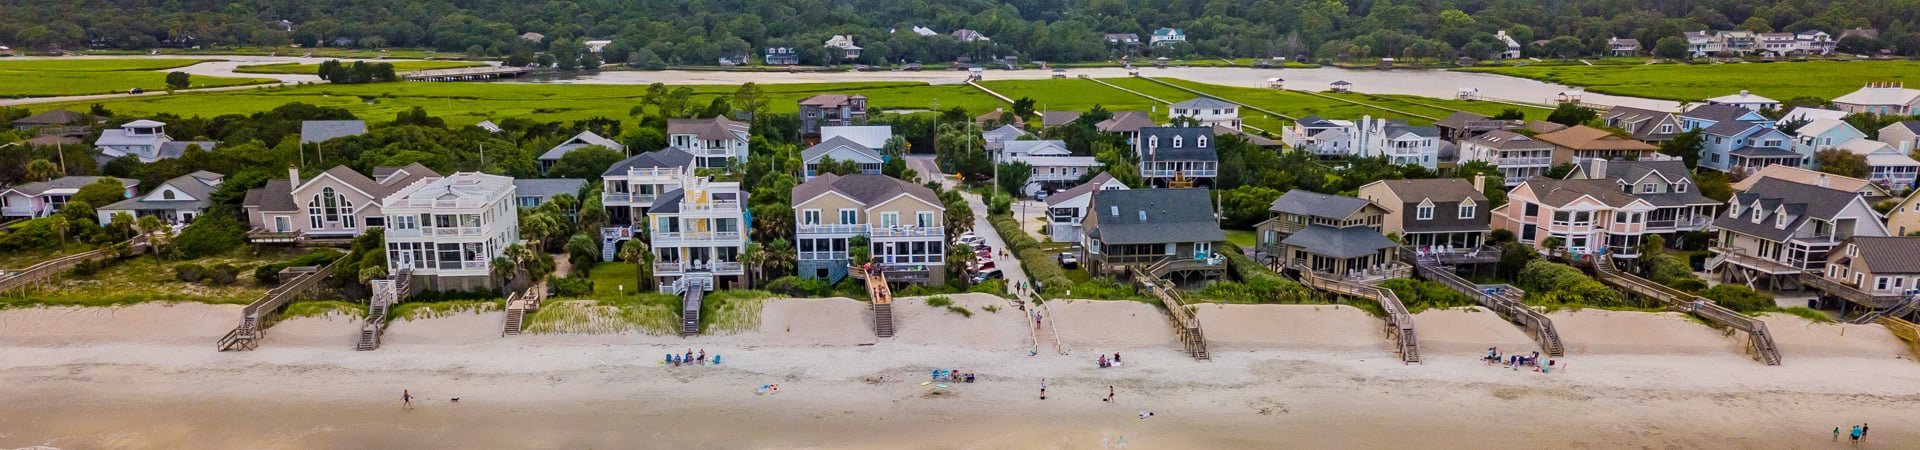 Pawleys Island Beach House Rentals Aerial